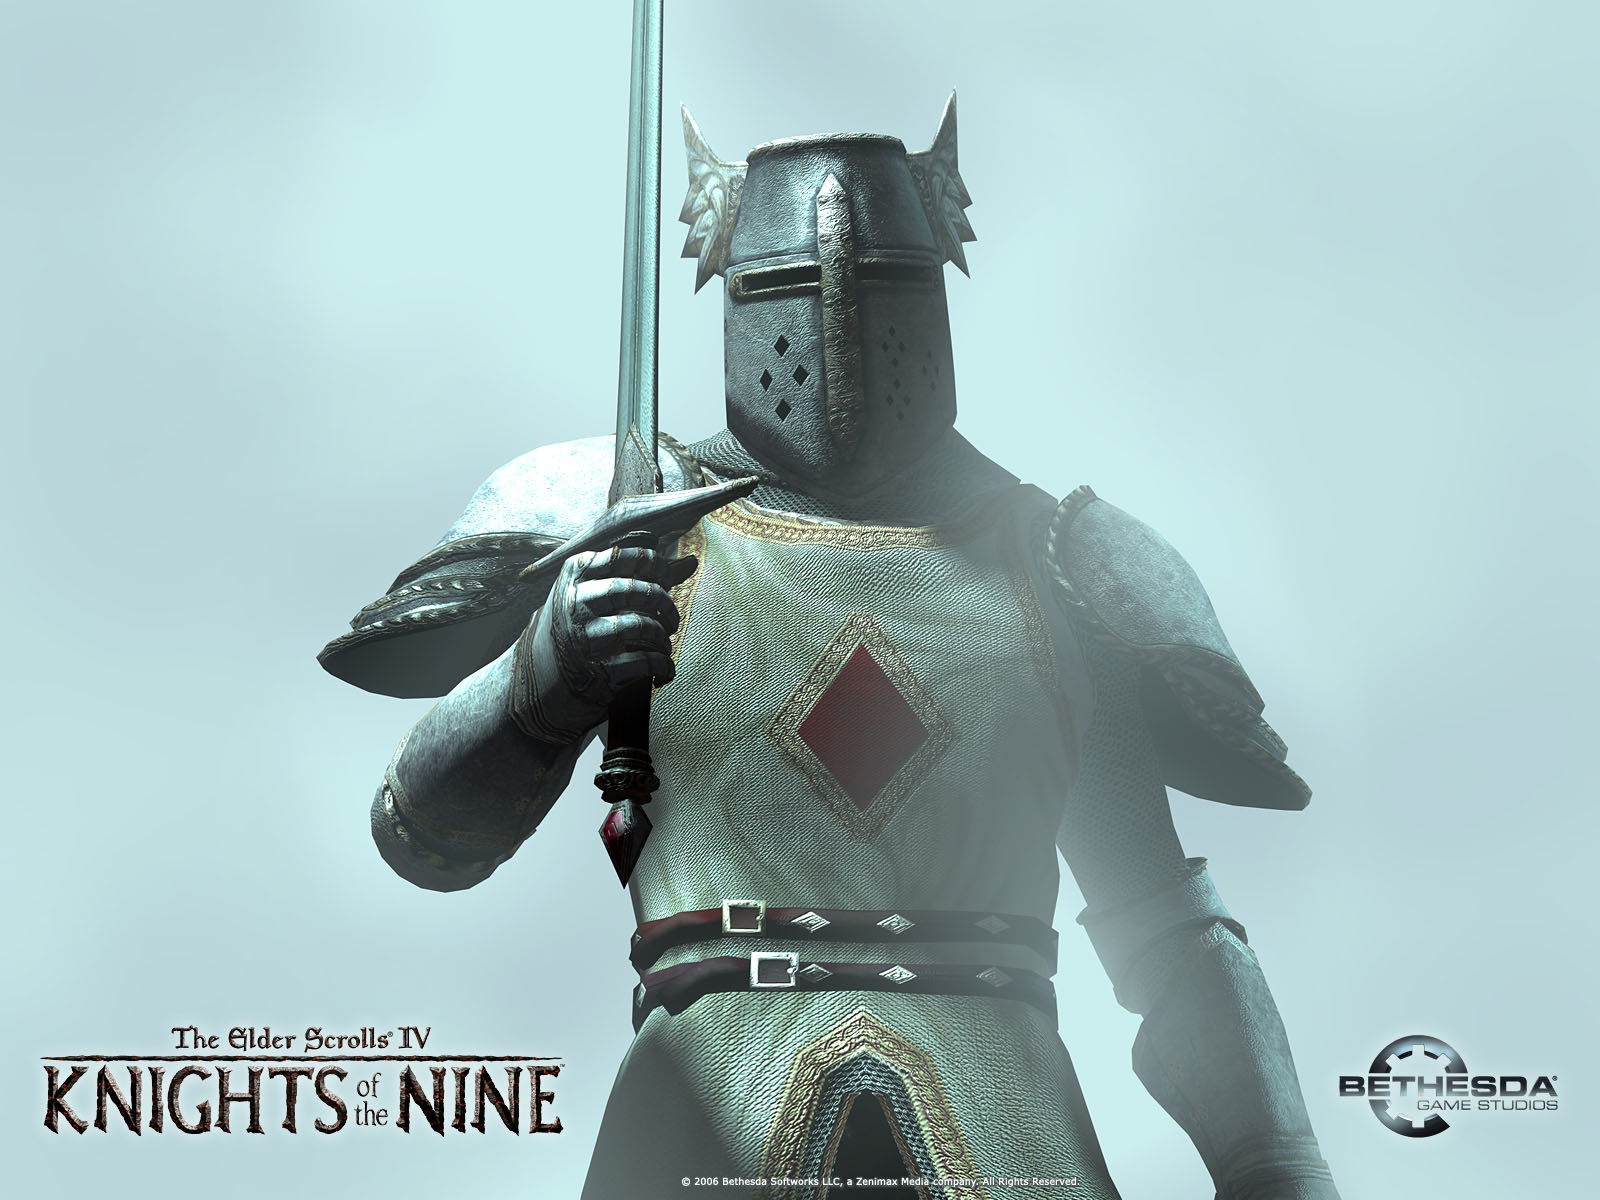 General 1600x1200 video games The Elder Scrolls IV: Oblivion knight RPG Bethesda Softworks armor sword weapon video game art PC gaming